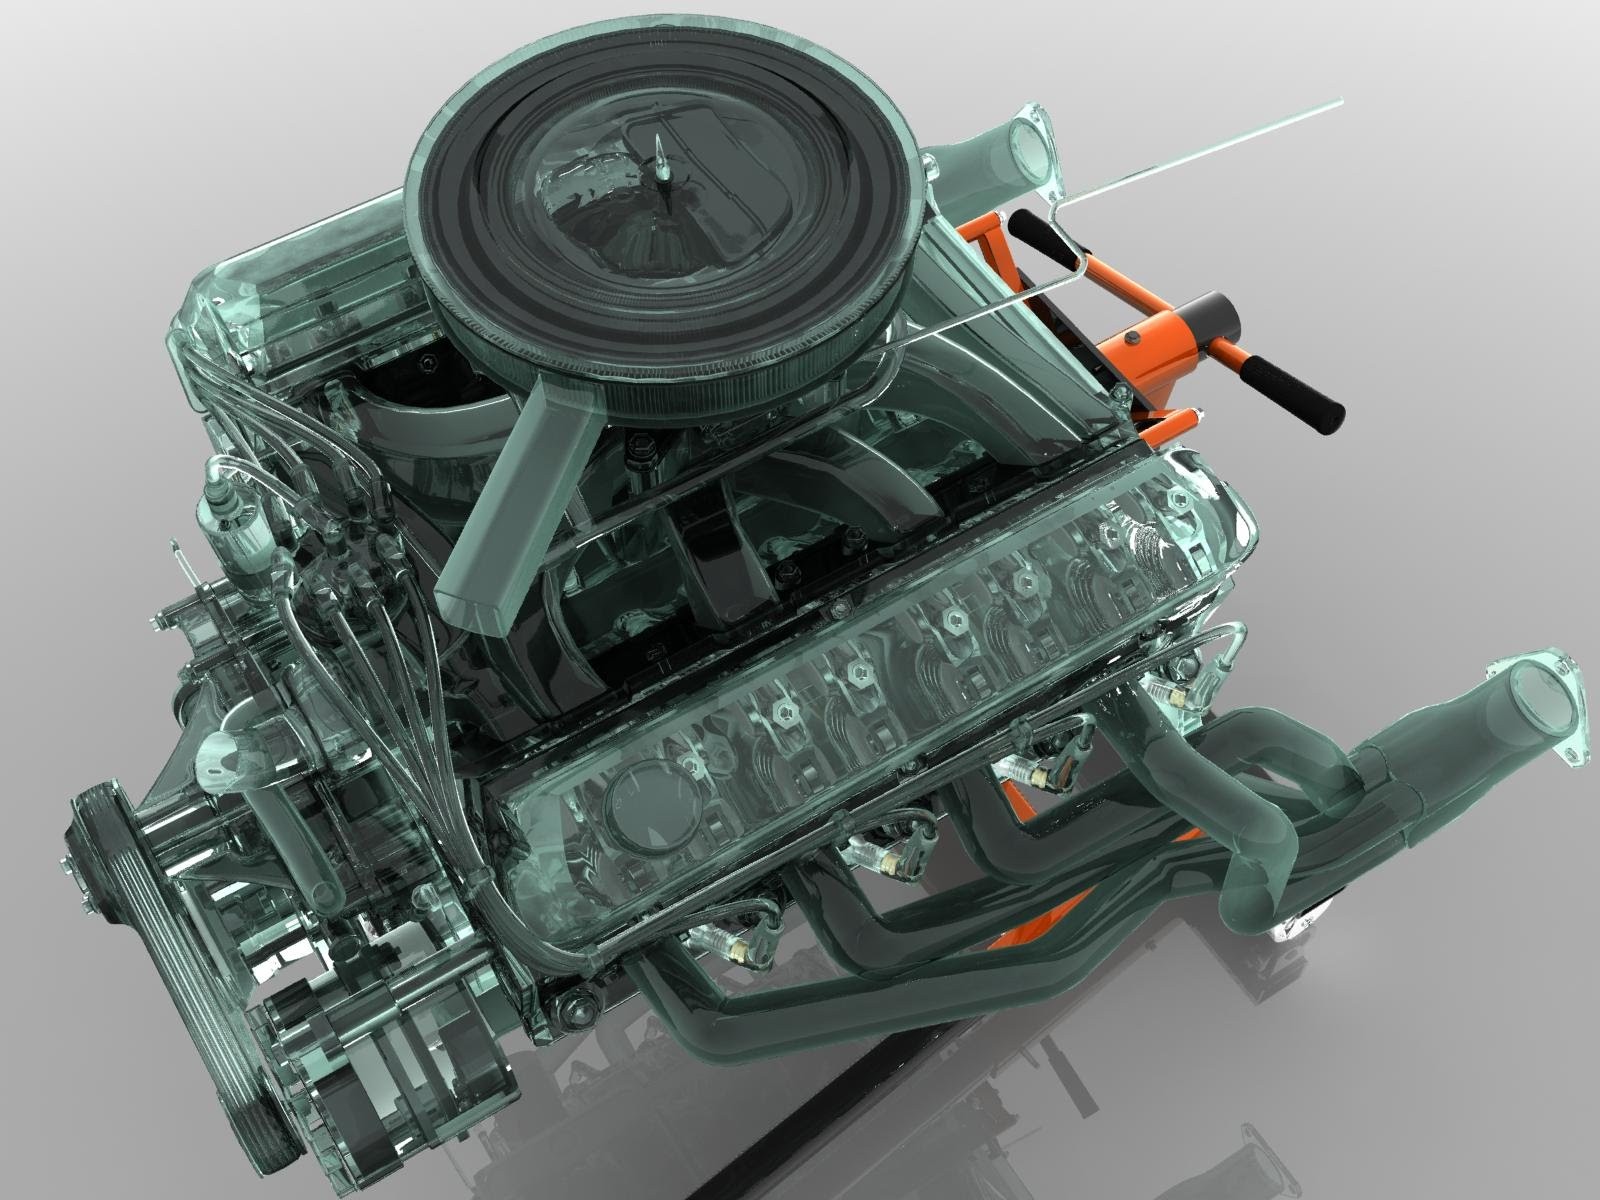 Animated V8 Engine Diagram